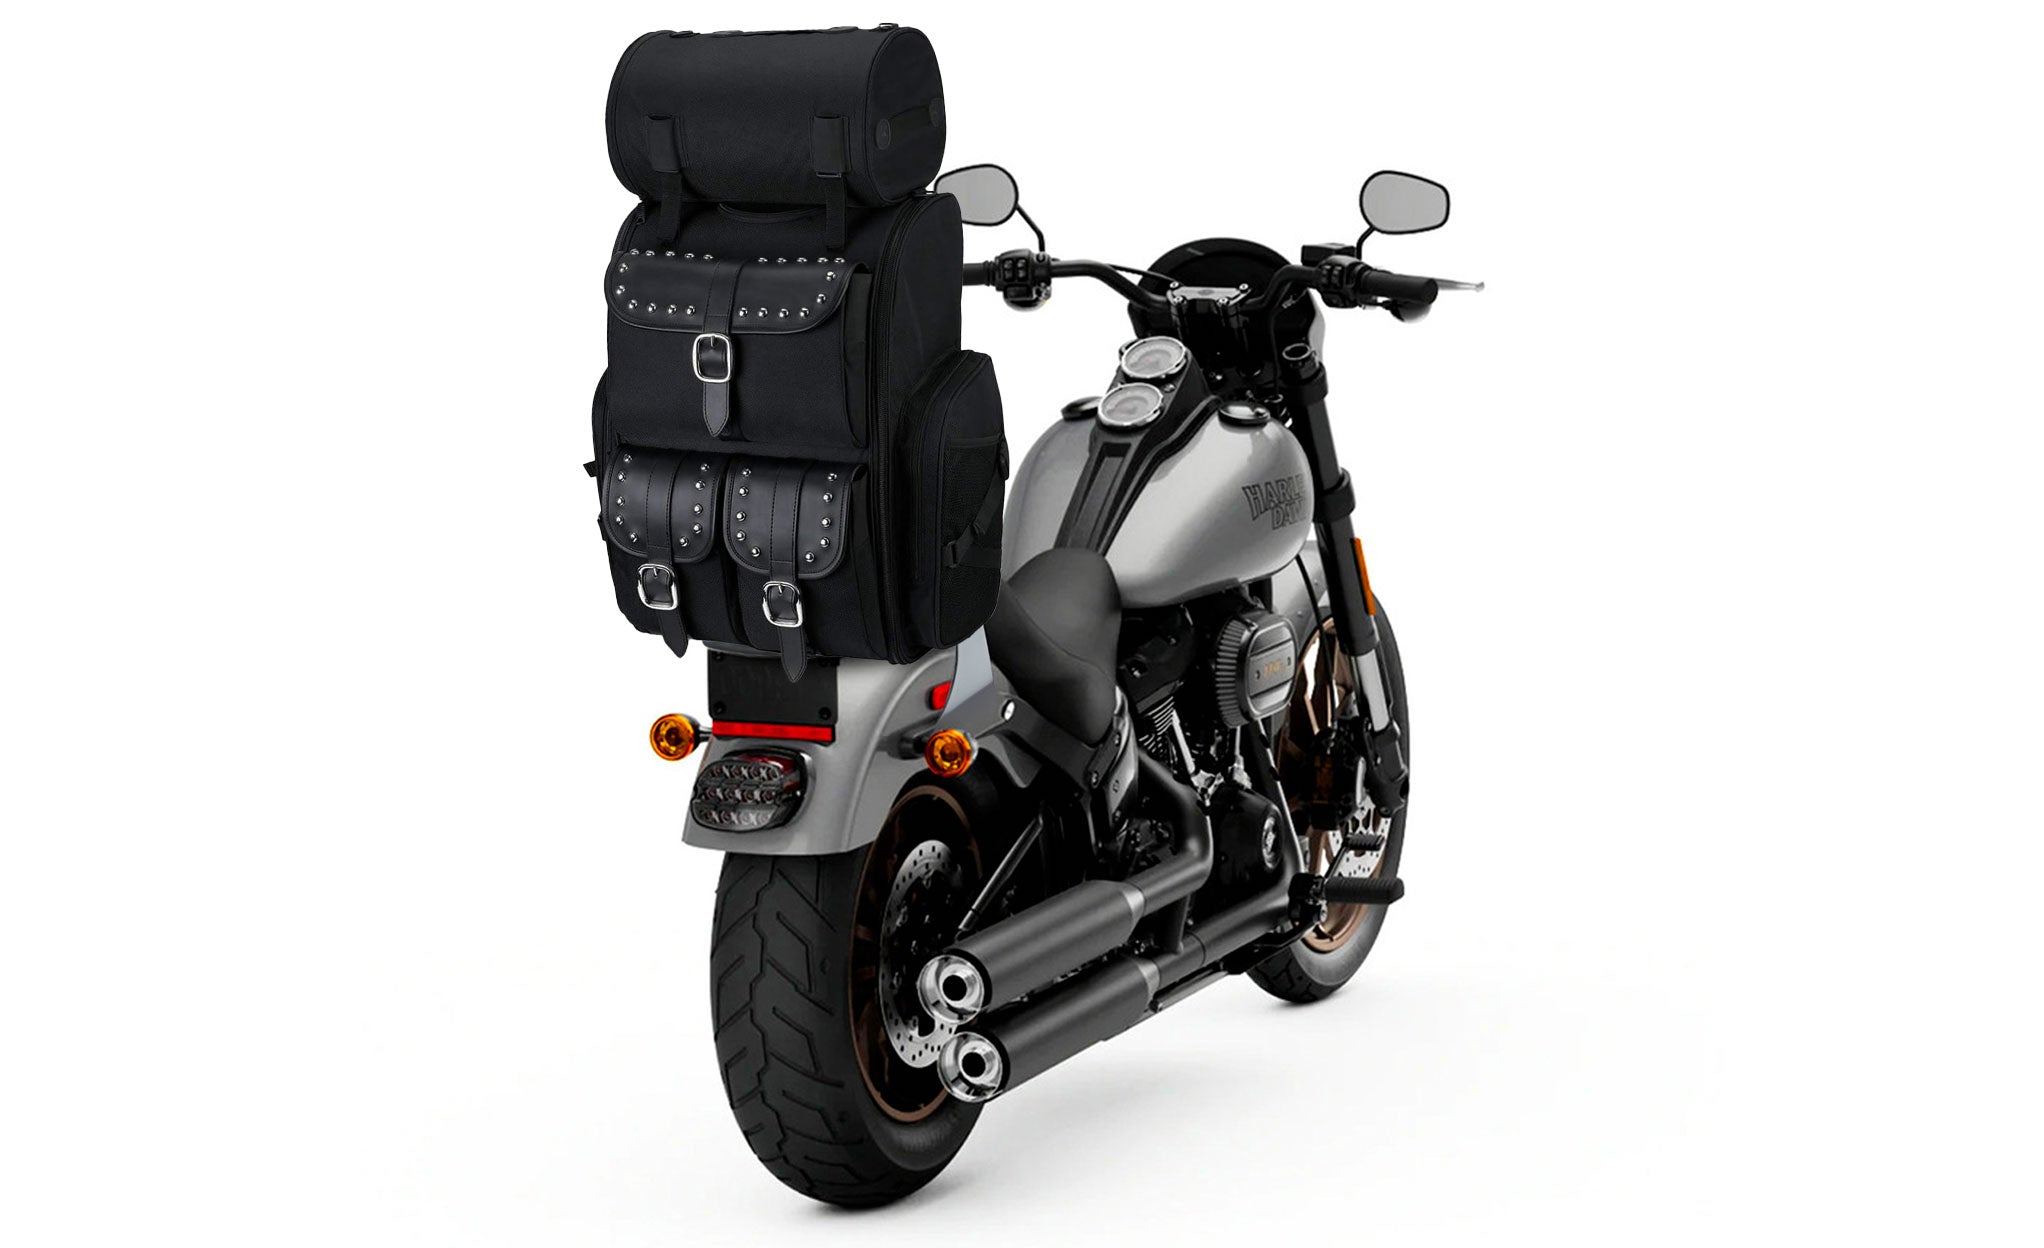 Viking Highway Extra Large Studded Motorcycle Sissy Bar Bag Bag on Bike View @expand